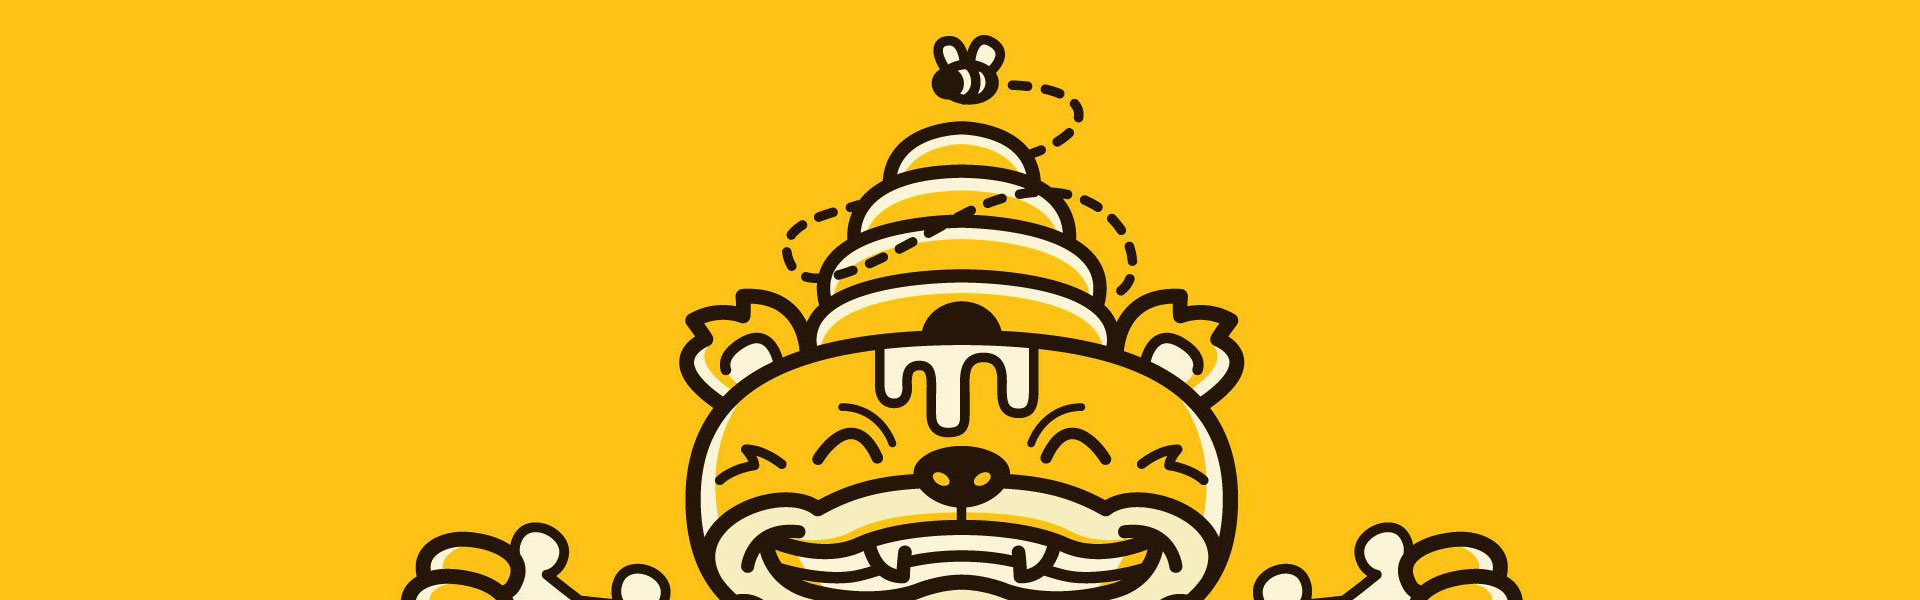 Wonderopolis Camp What-a-Wonder - Bear with beehive on his head